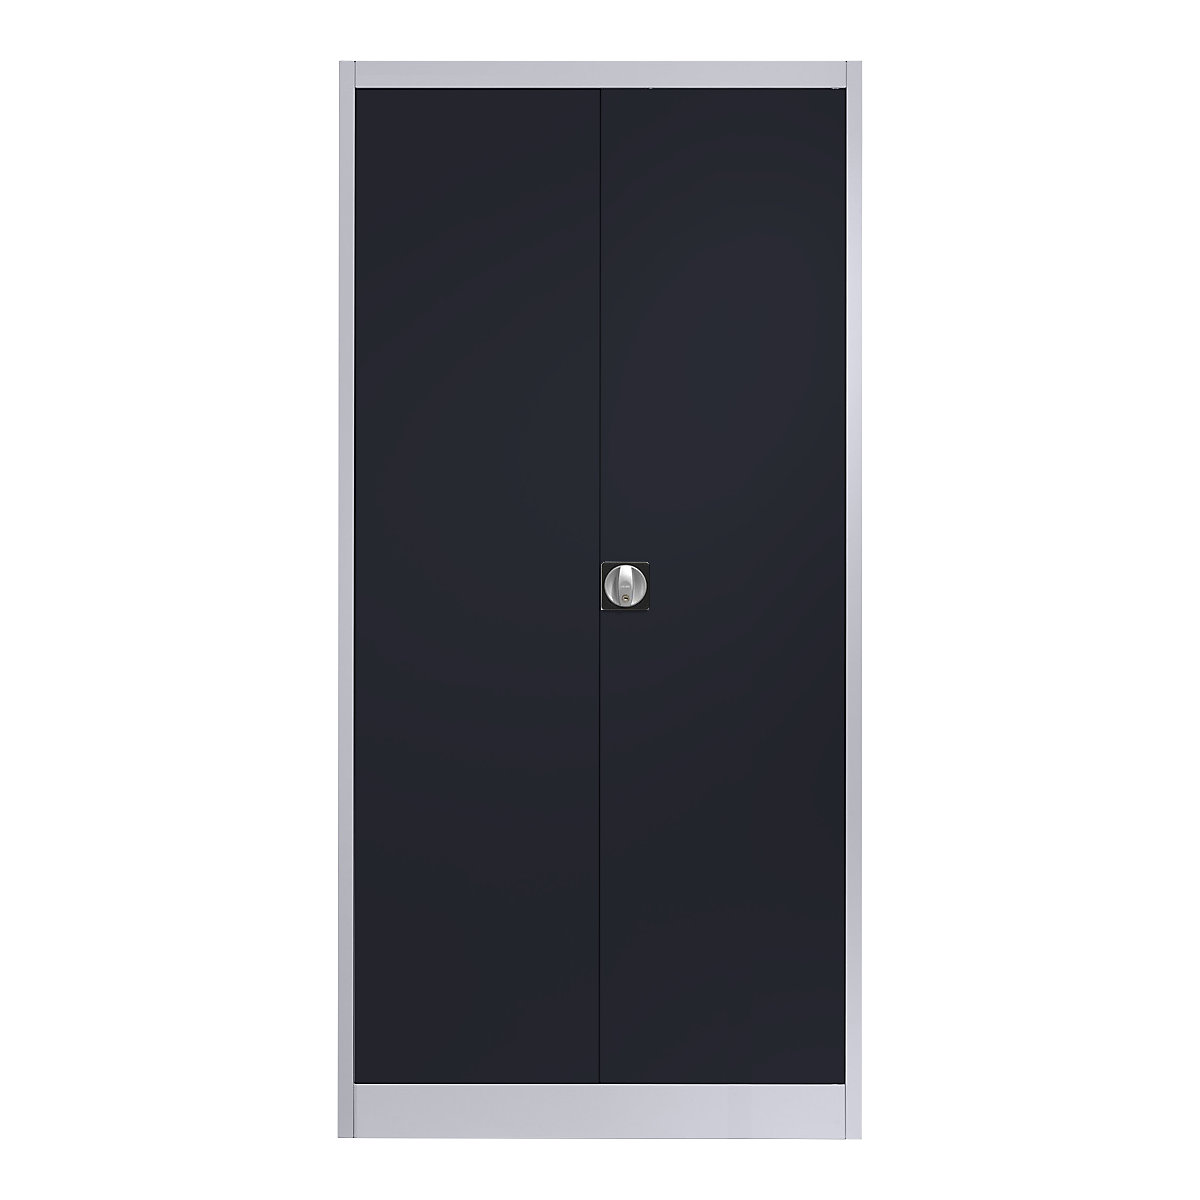 Jeklena omara s krilnimi vrati – mauser, 4 police, G 420 mm, belo aluminijast / antracitno siv, od 2 kosov-5